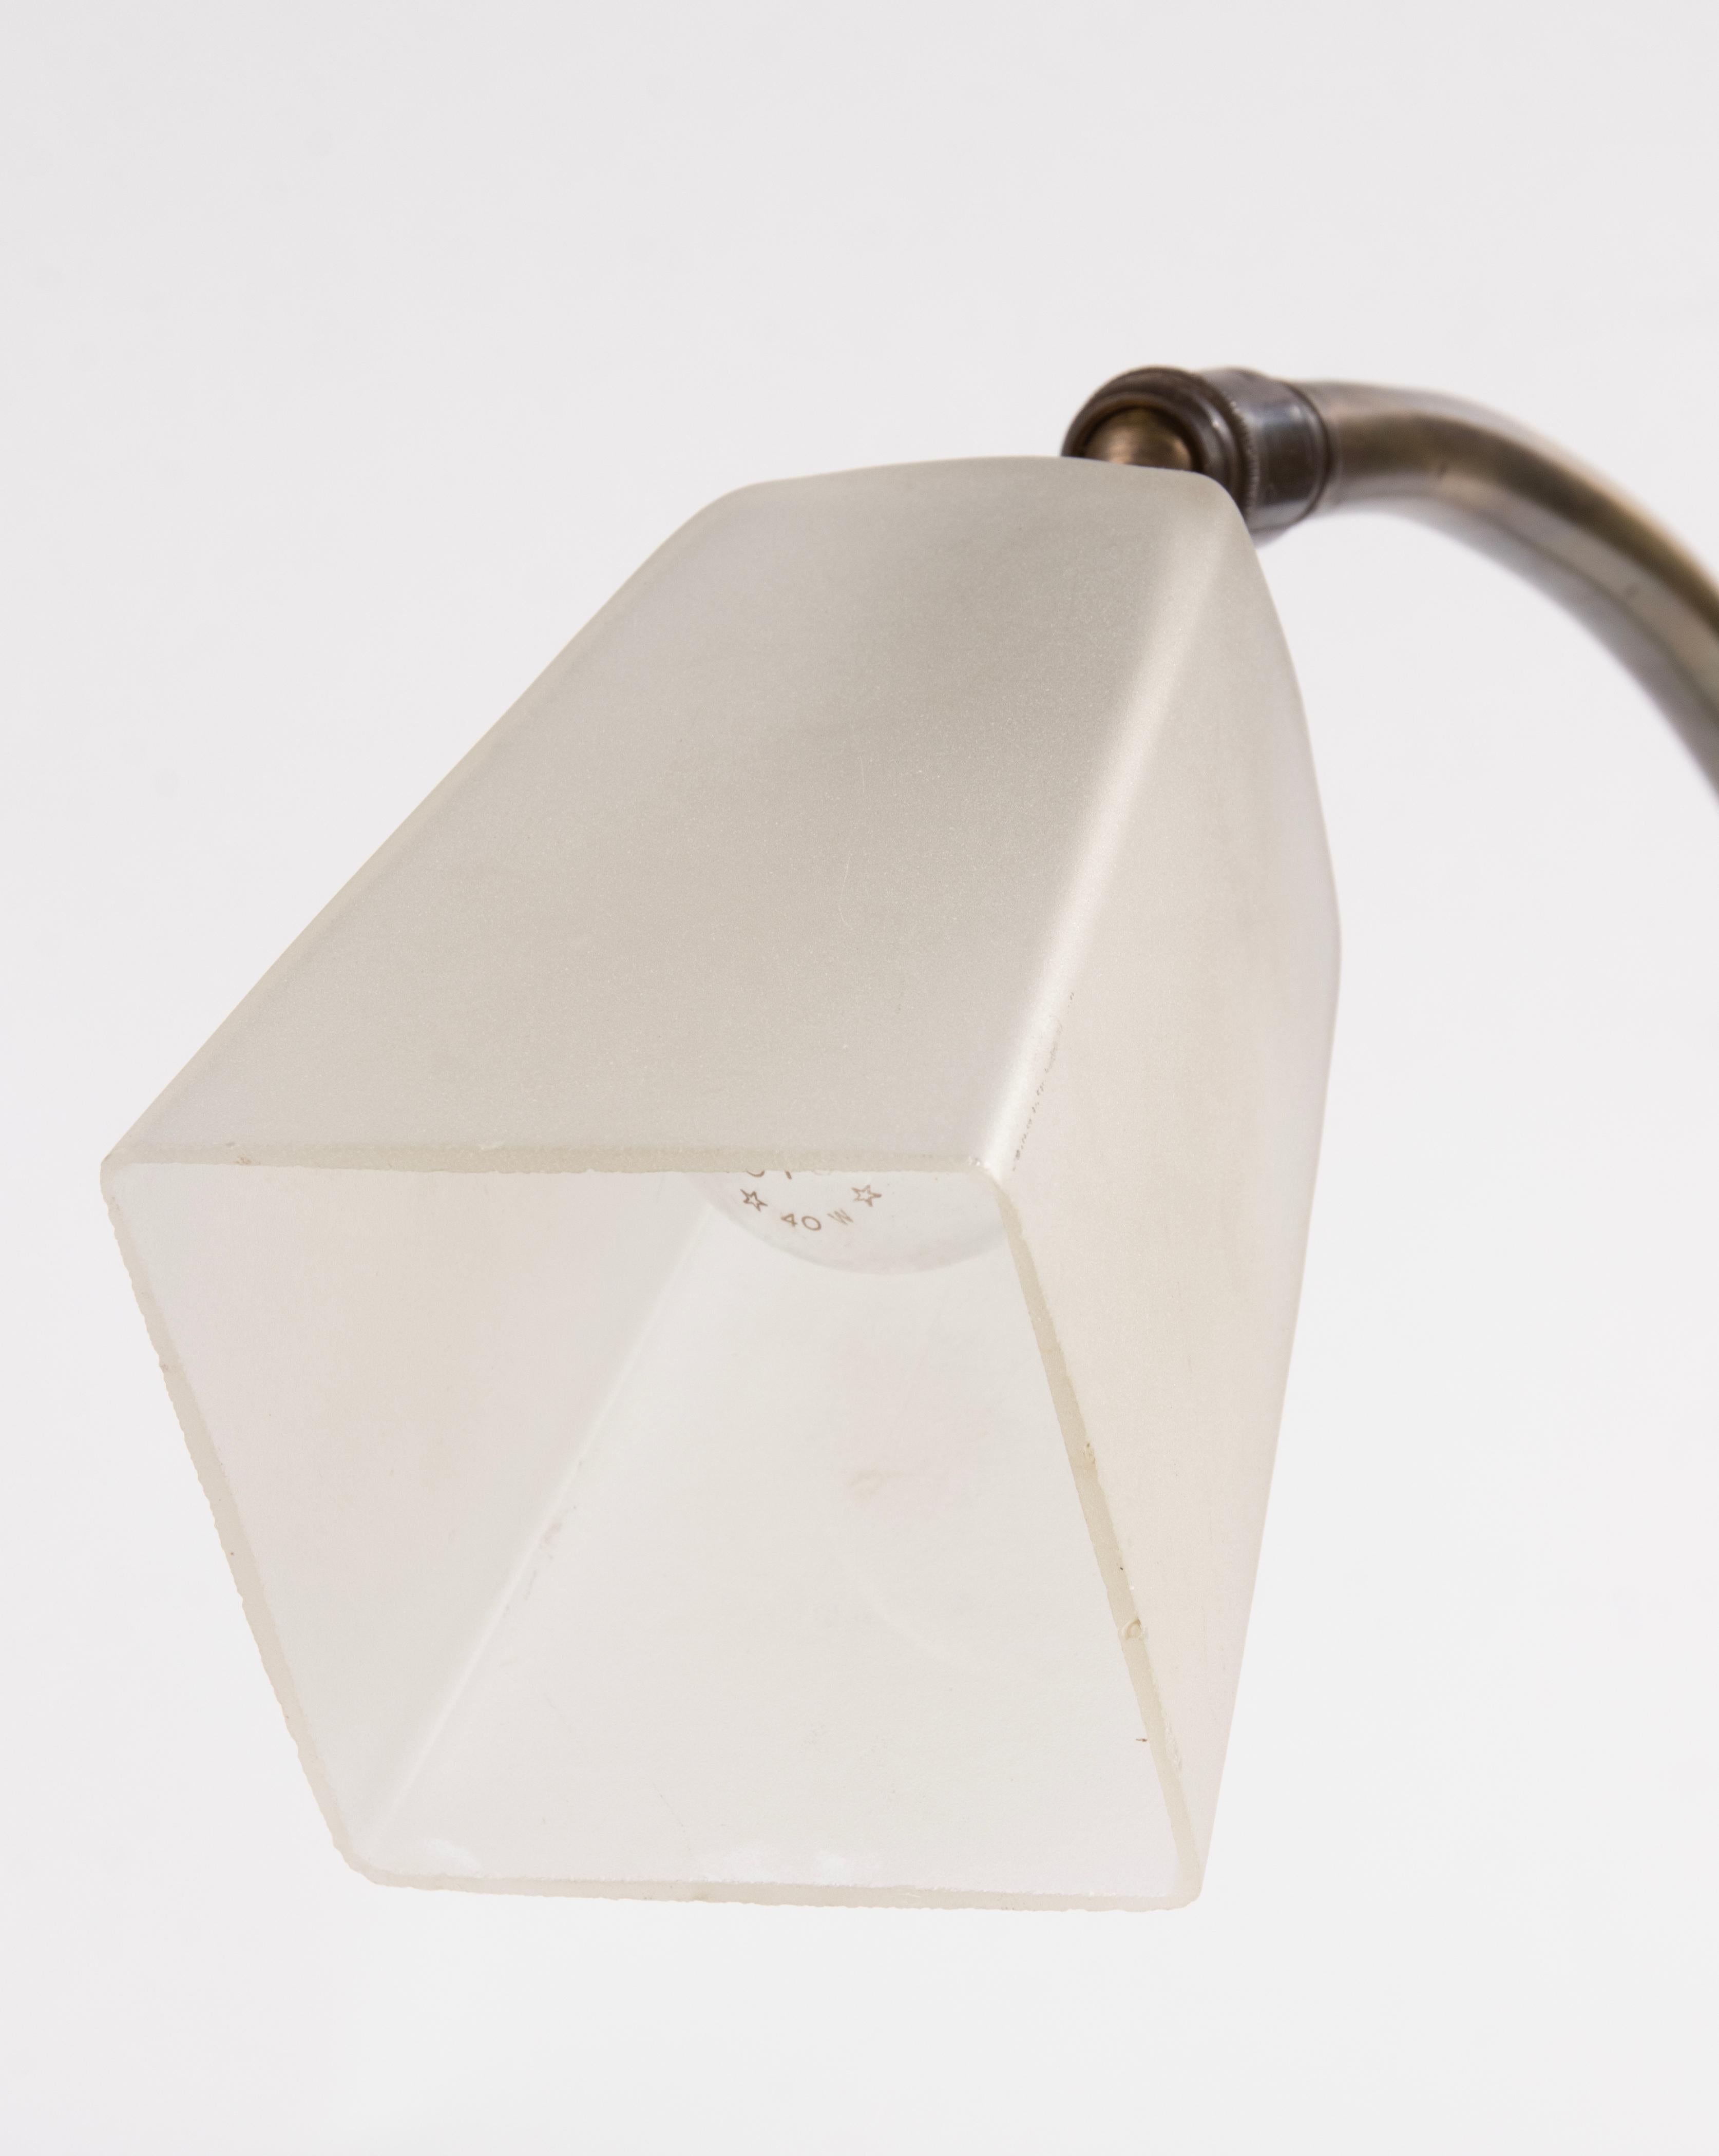 Art Deco Period Cast Iron-Brass Desk Lamp For Sale 2